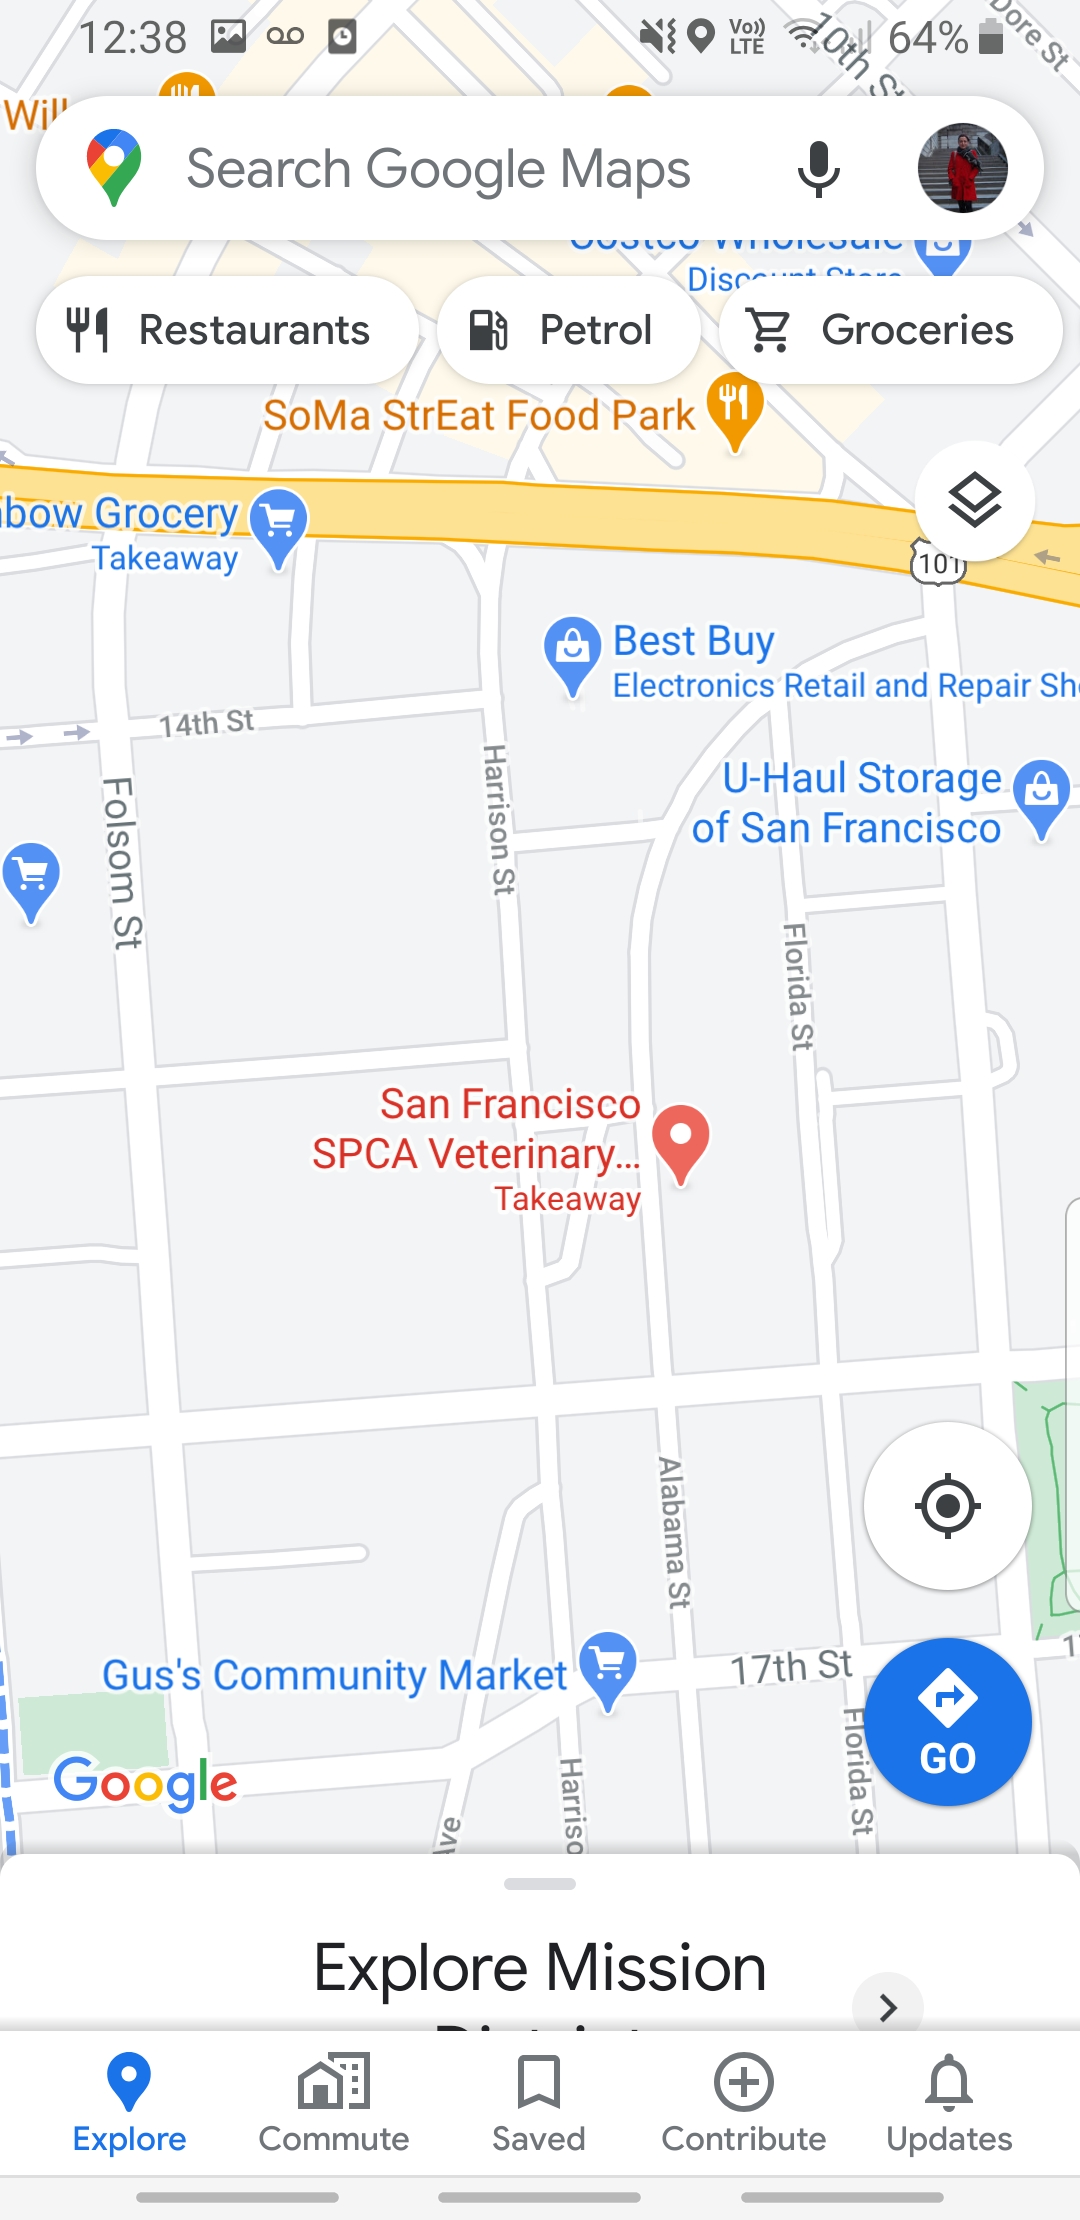 drop a pin in google maps